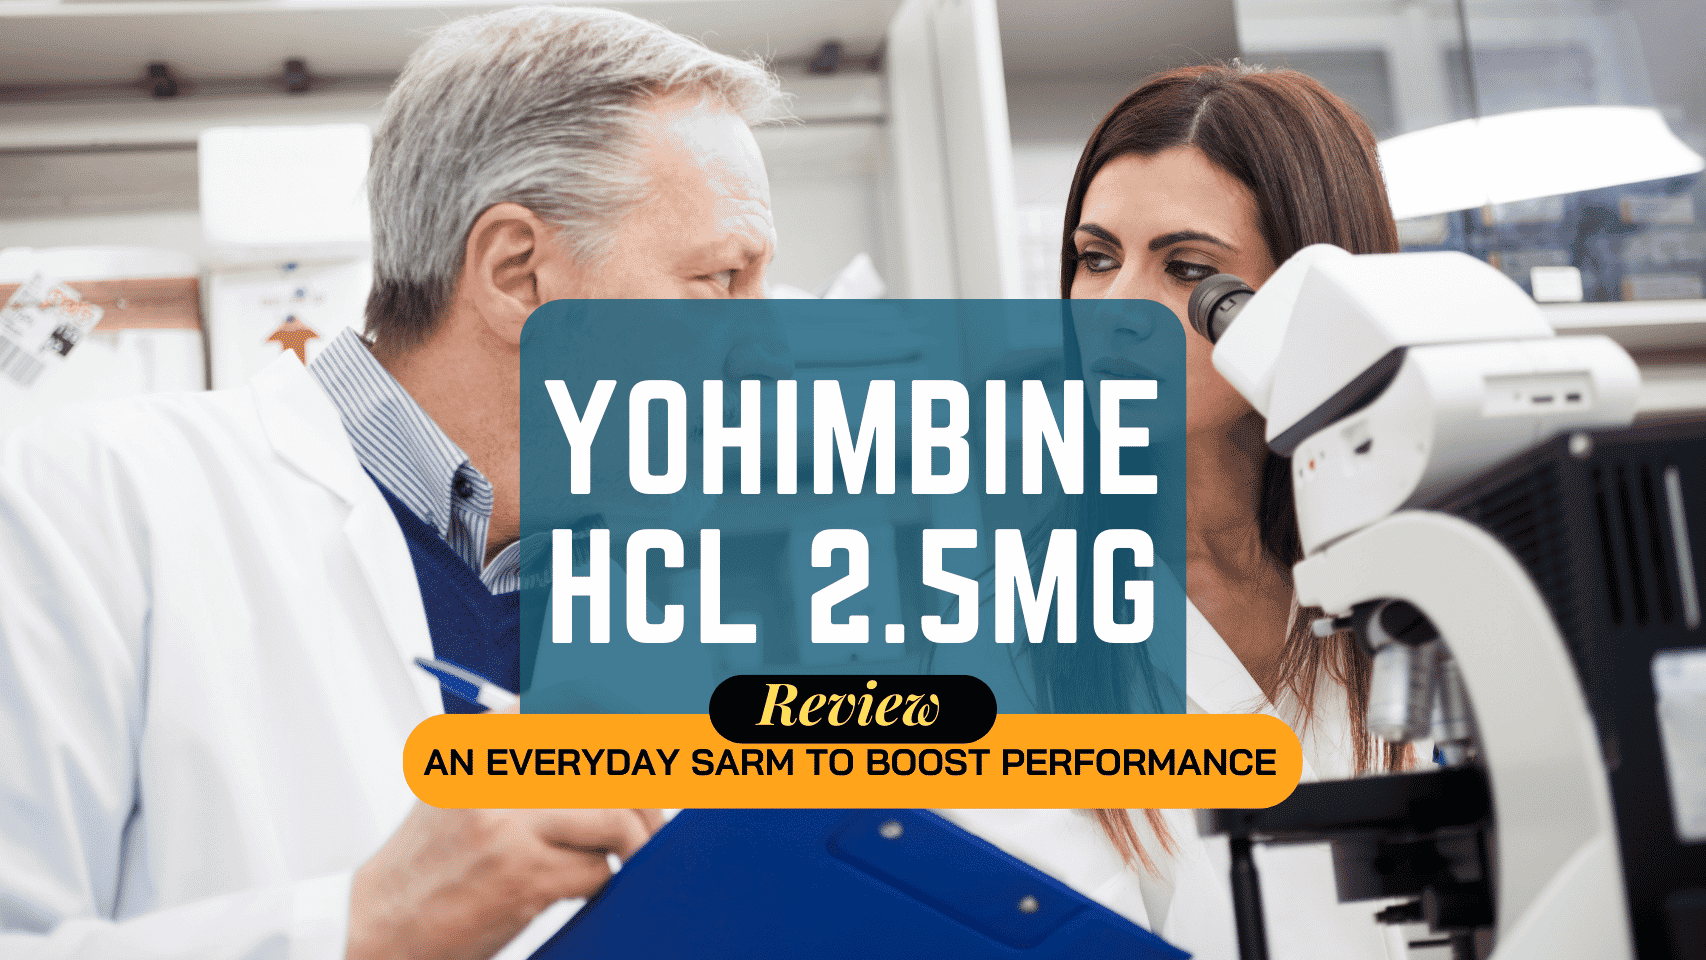 Yohimbine HCL 2 5MG Review 1